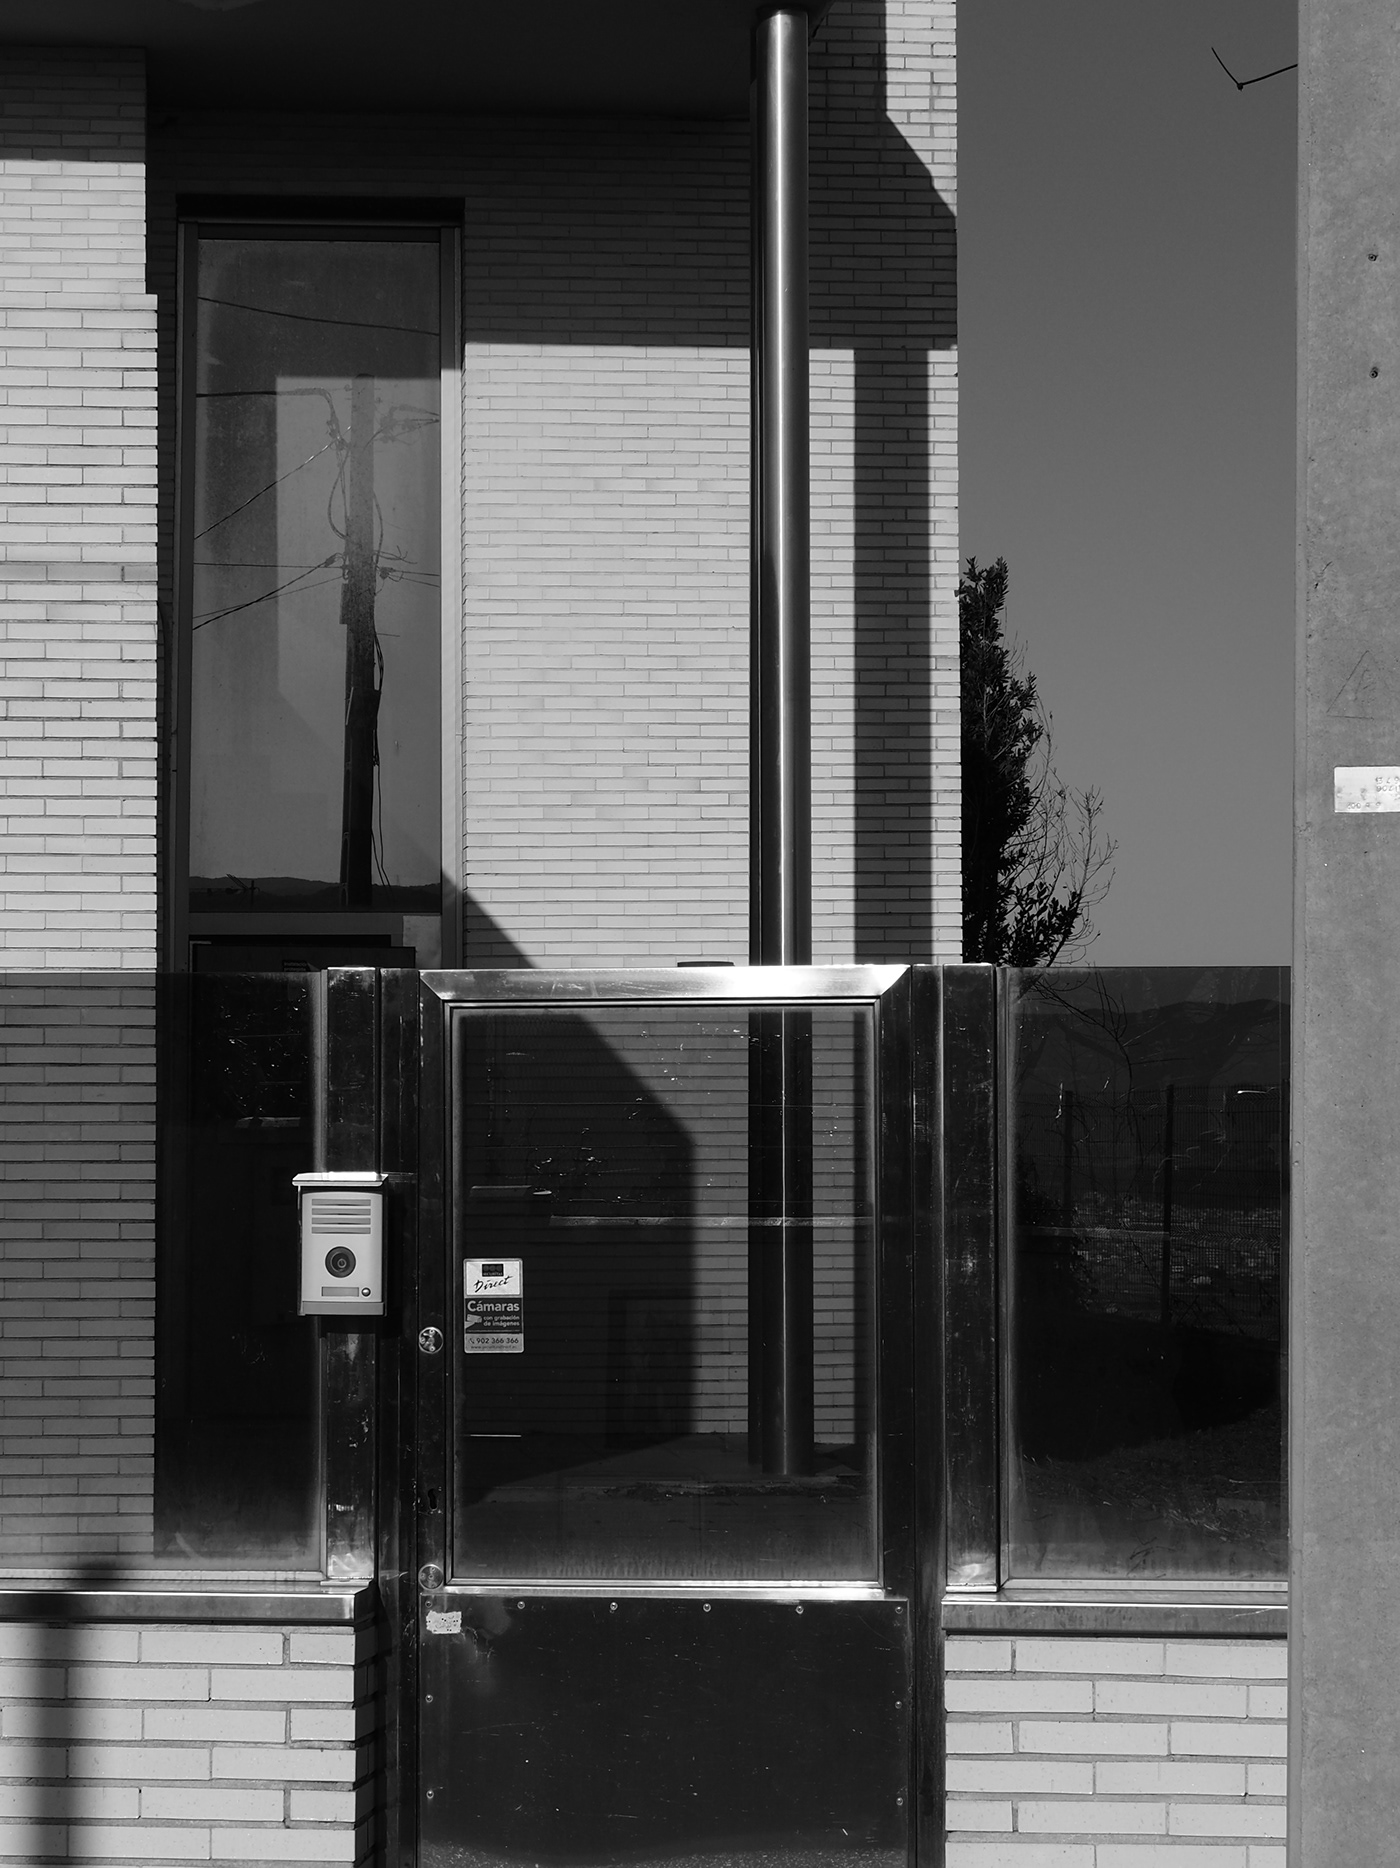 monochrome black and white architecture buildings photografy Residential area urbanització street photografy